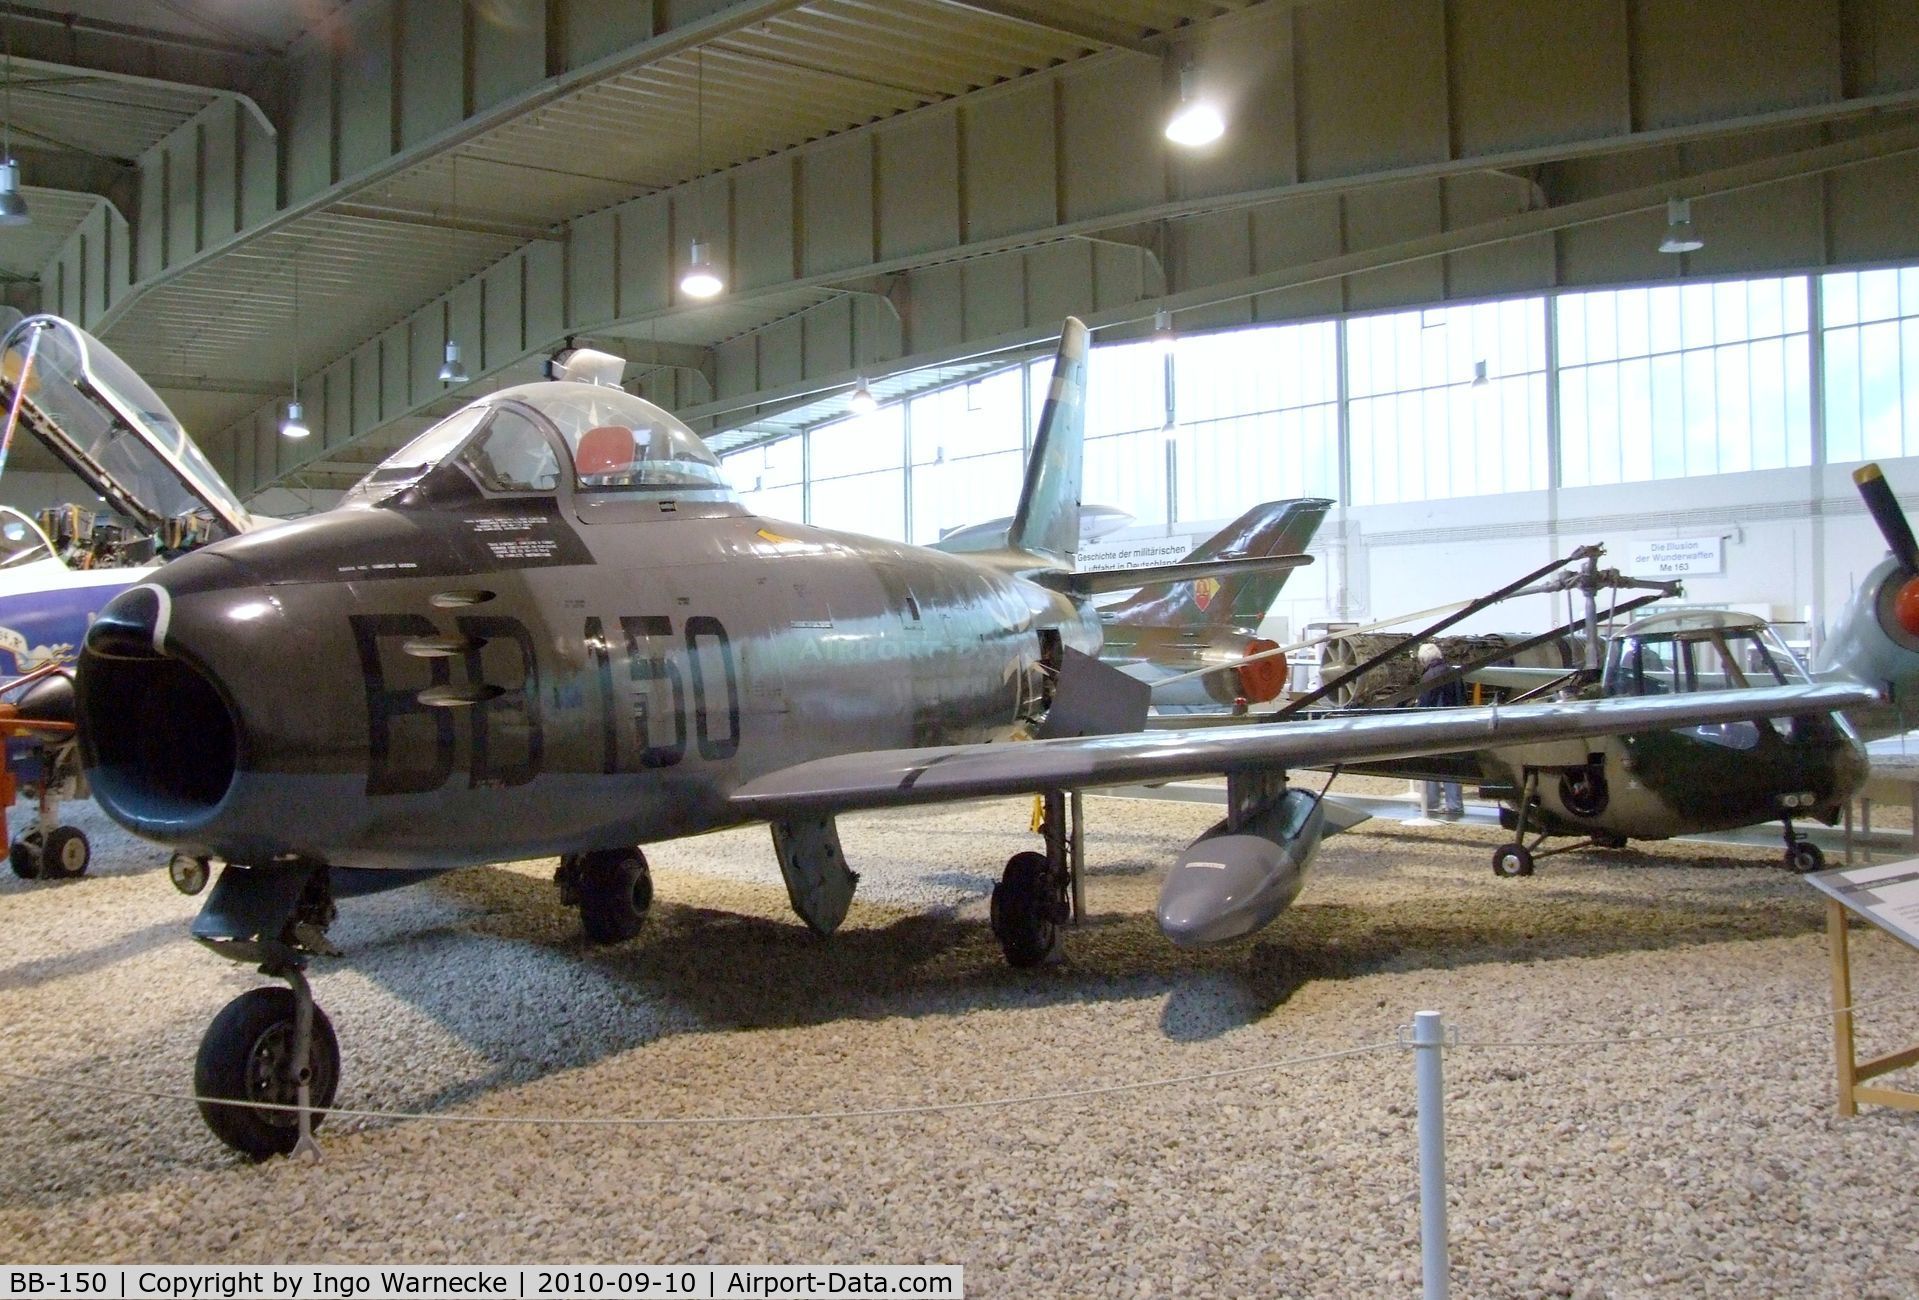 BB-150, Canadair CL-13A Sabre 5 C/N 895, Canadair CL-13A Sabre 5 (F-86) at the Luftwaffenmuseum, Berlin-Gatow